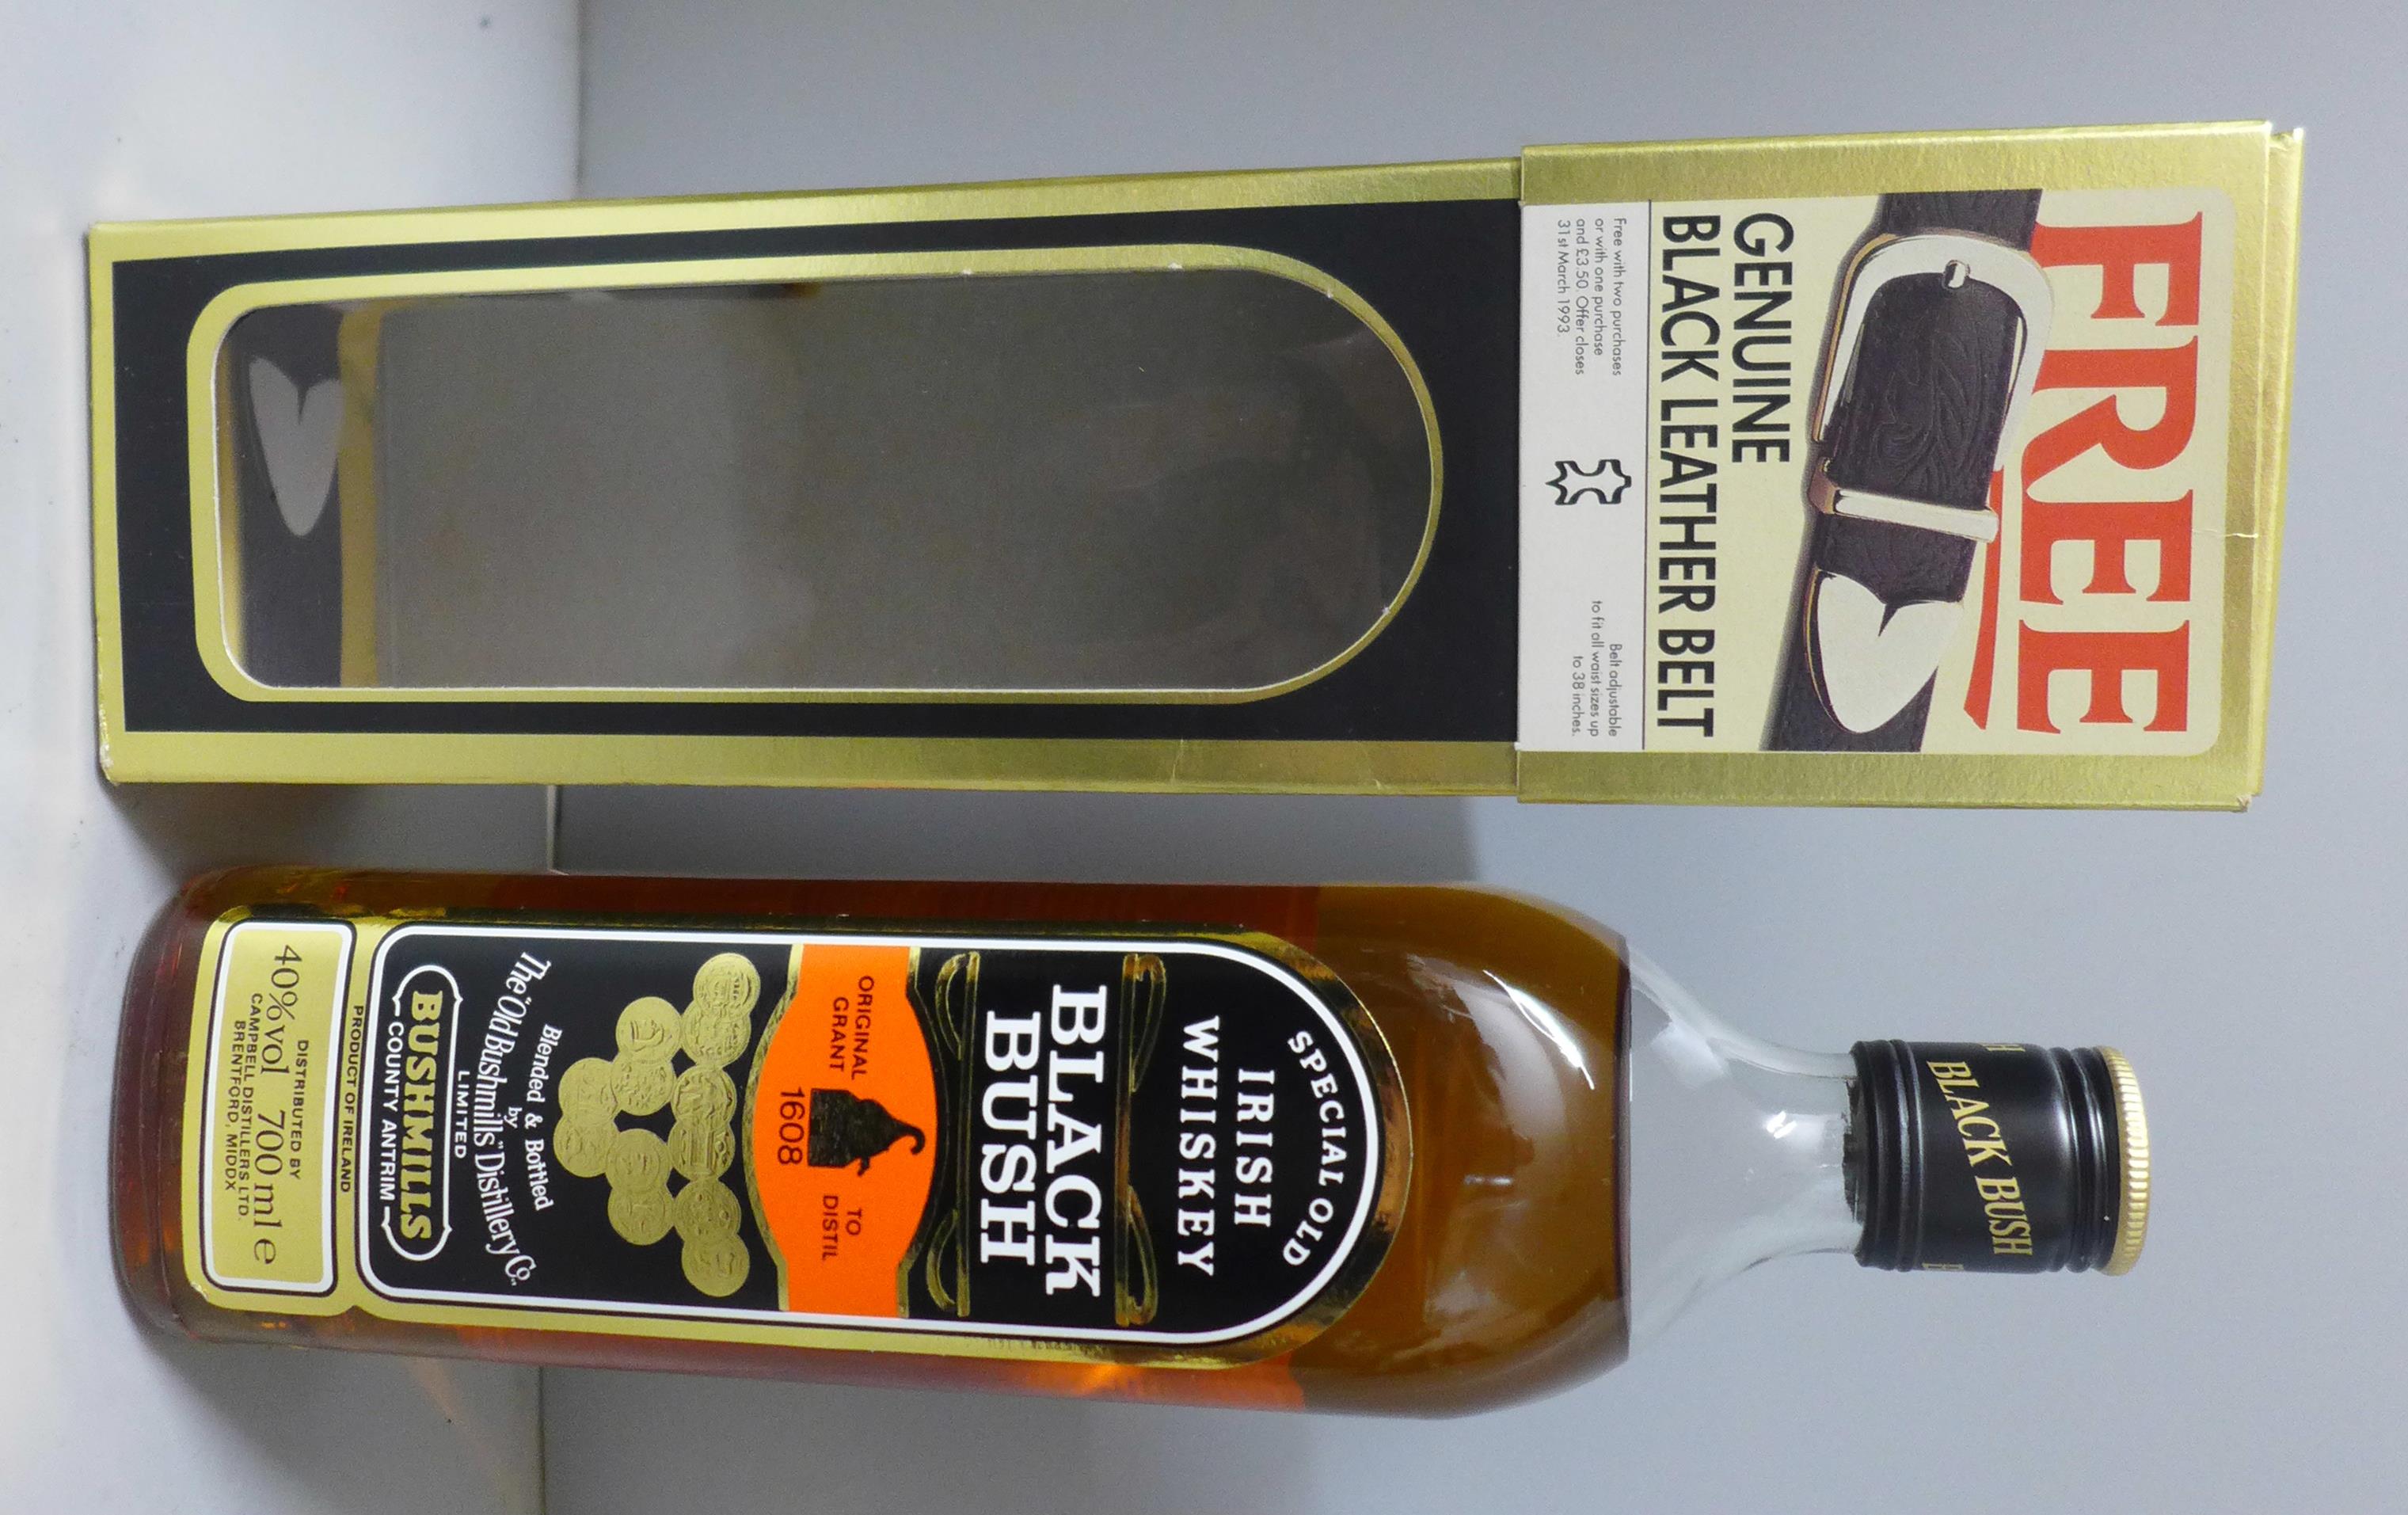 A bottle of Black Bush Bushmills Special Old Irish Whiskey, boxed